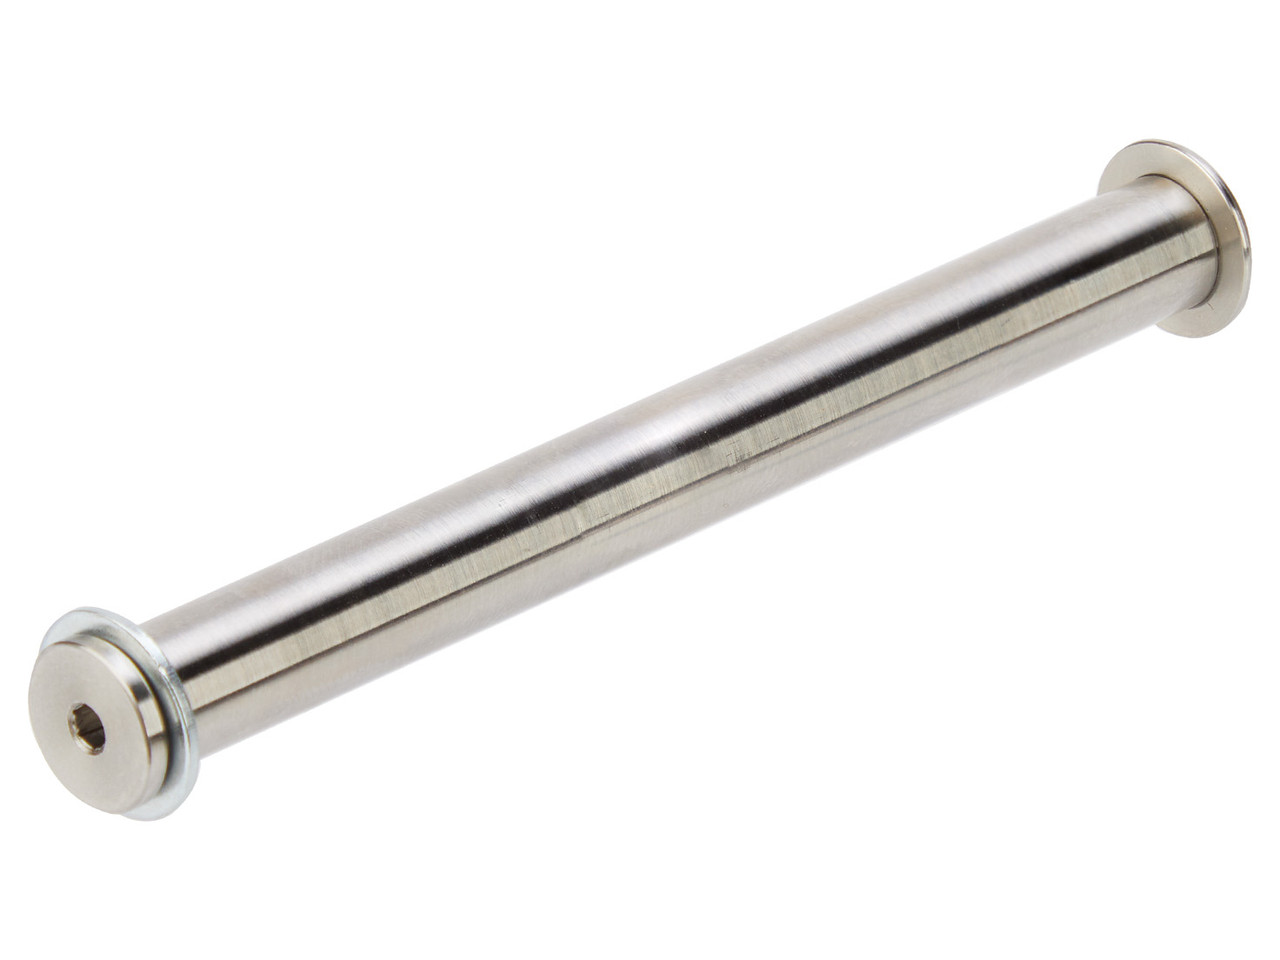 NDZ Springfield Echelon Stainless Steel Captured Guide Rod Assembly 9mm